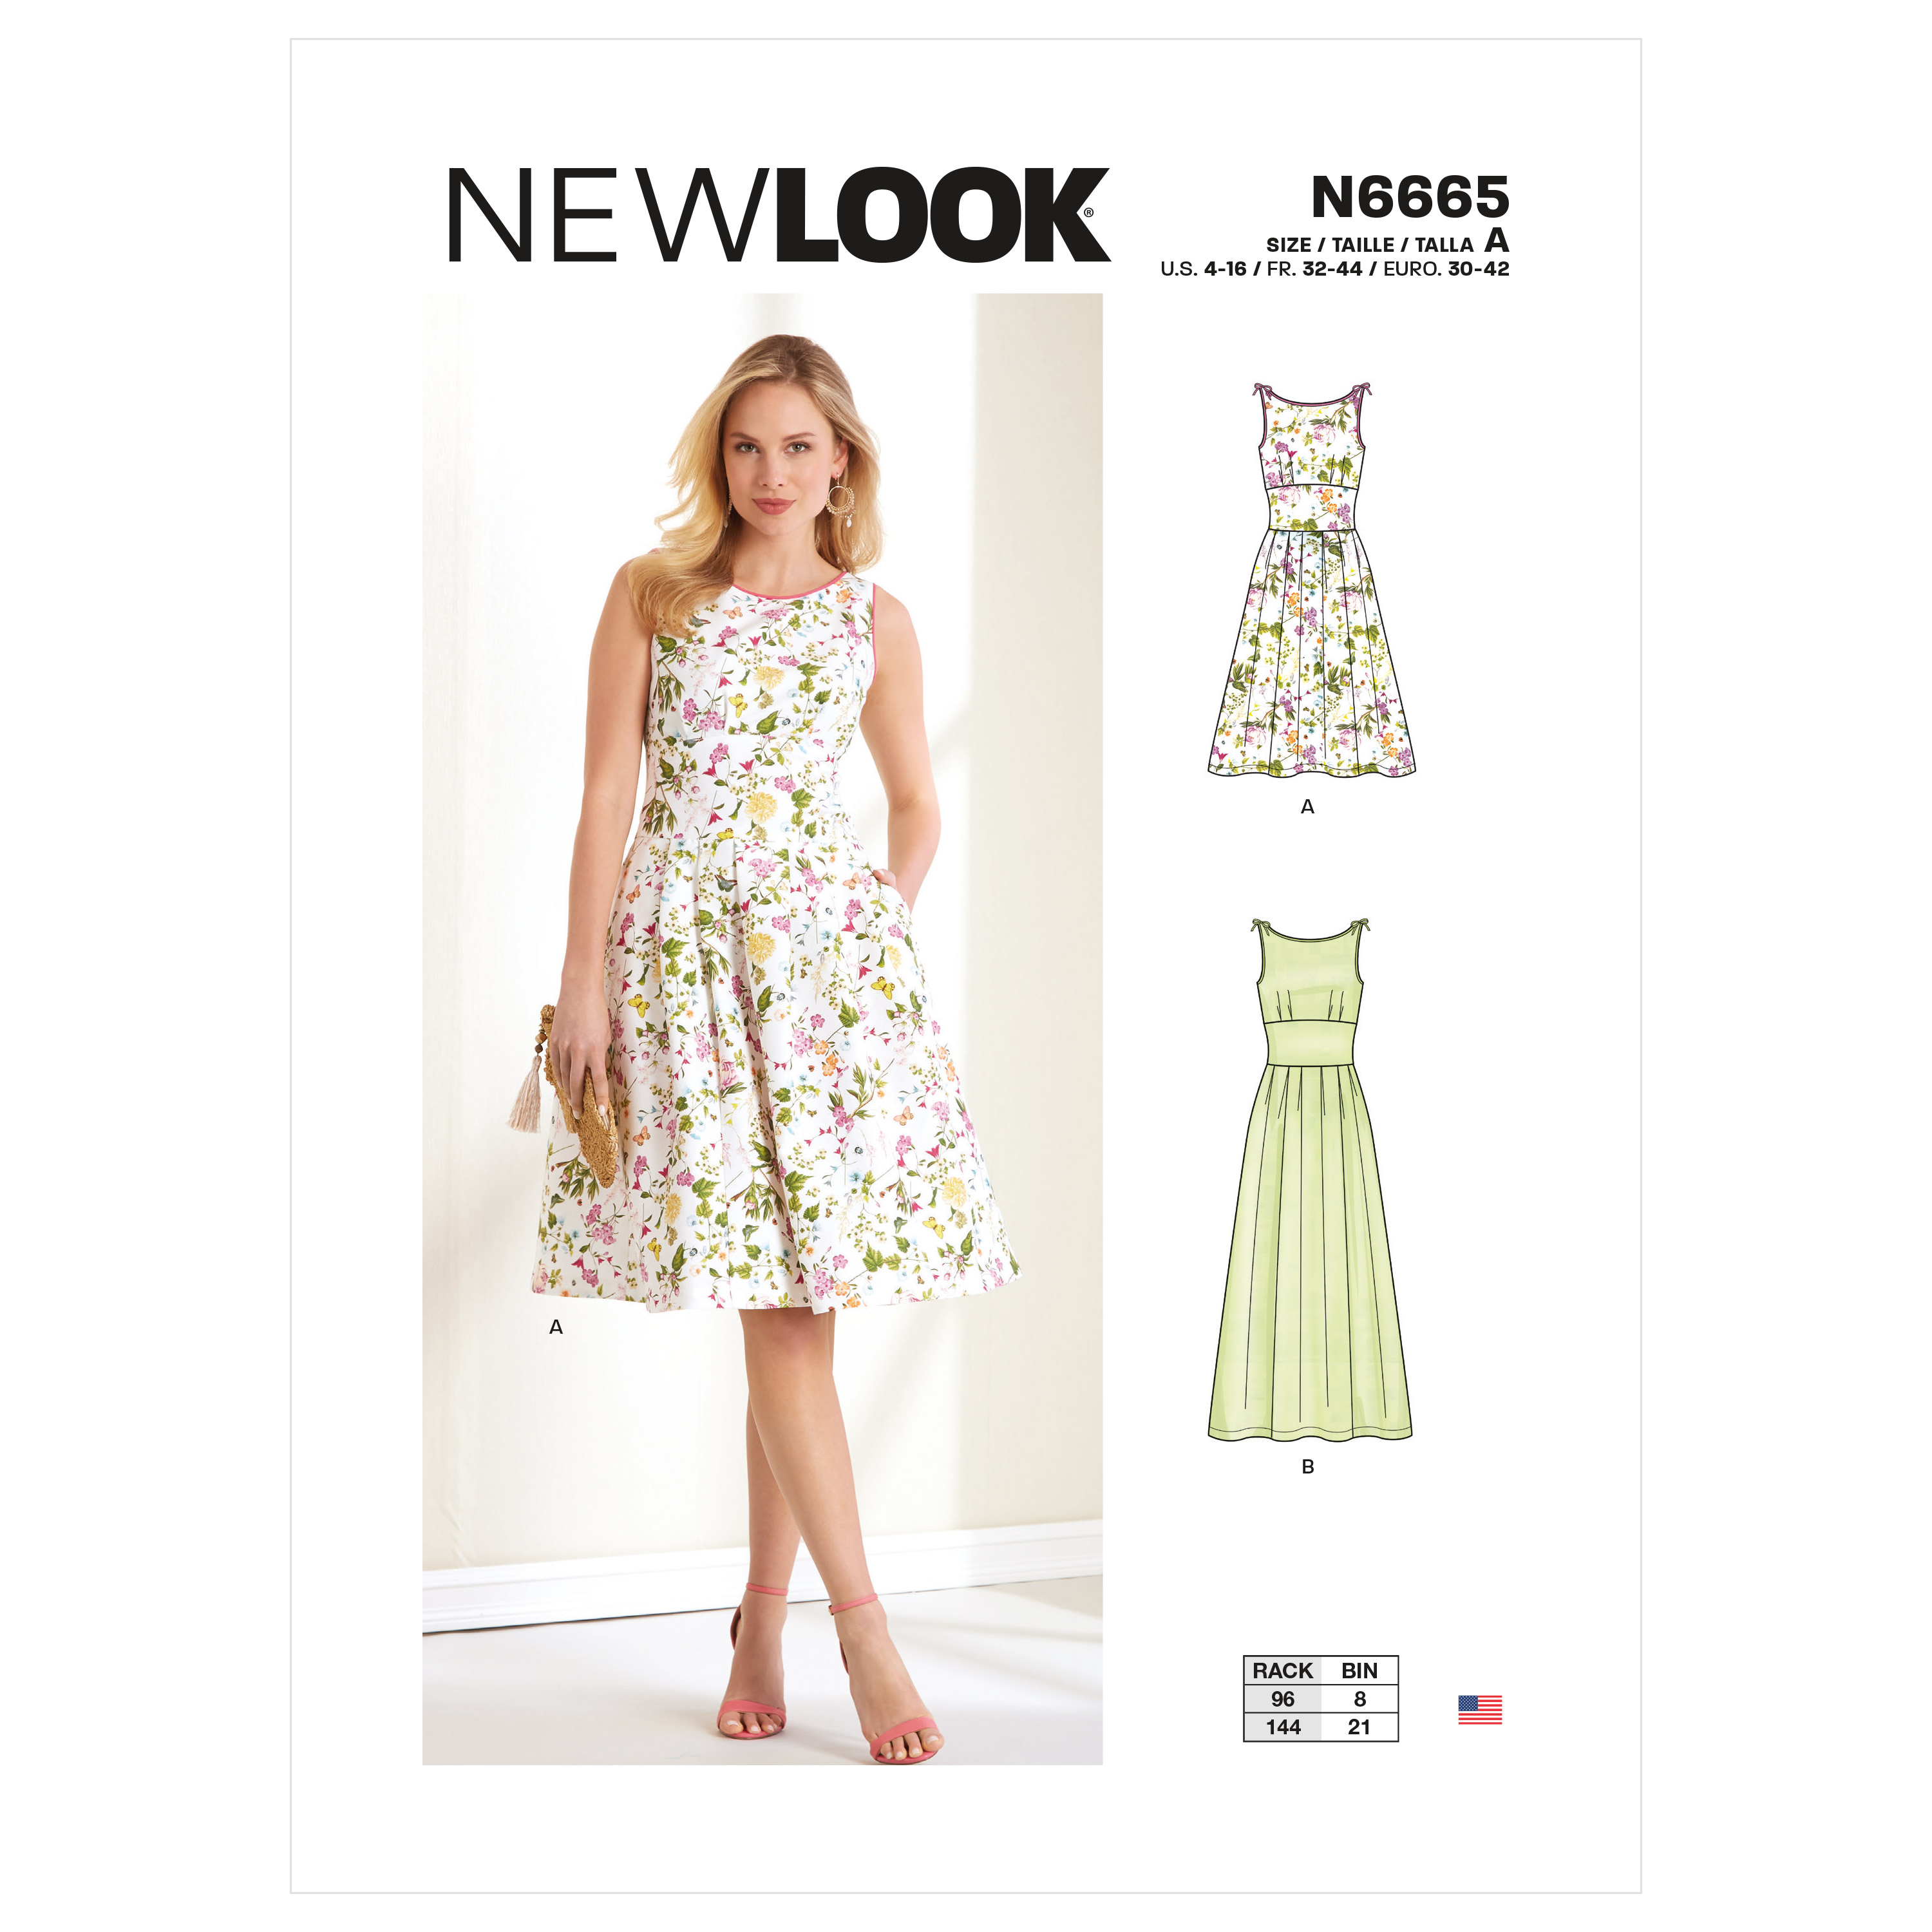 New Look 6665 Misses' Dresses